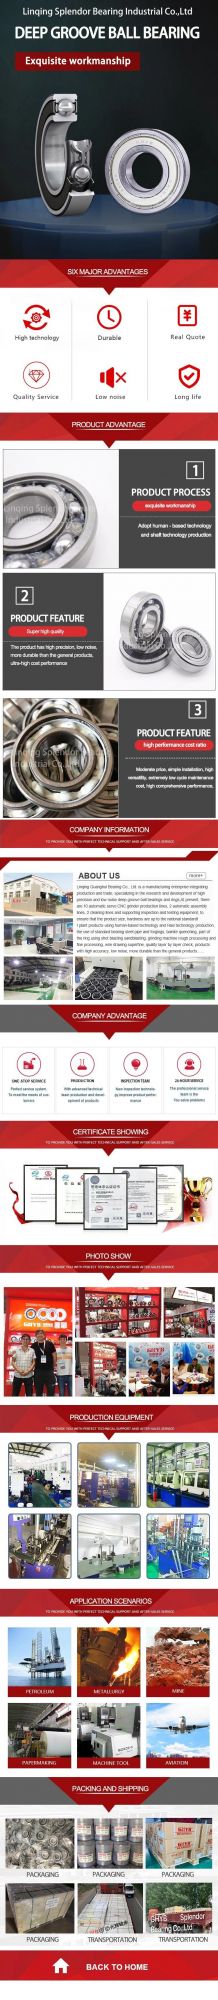 China Factory Distributor Supplier of Deep Groove Ball Bearings for Motors, Compressors, Alternators 6208-2rz/P6/Z2V2